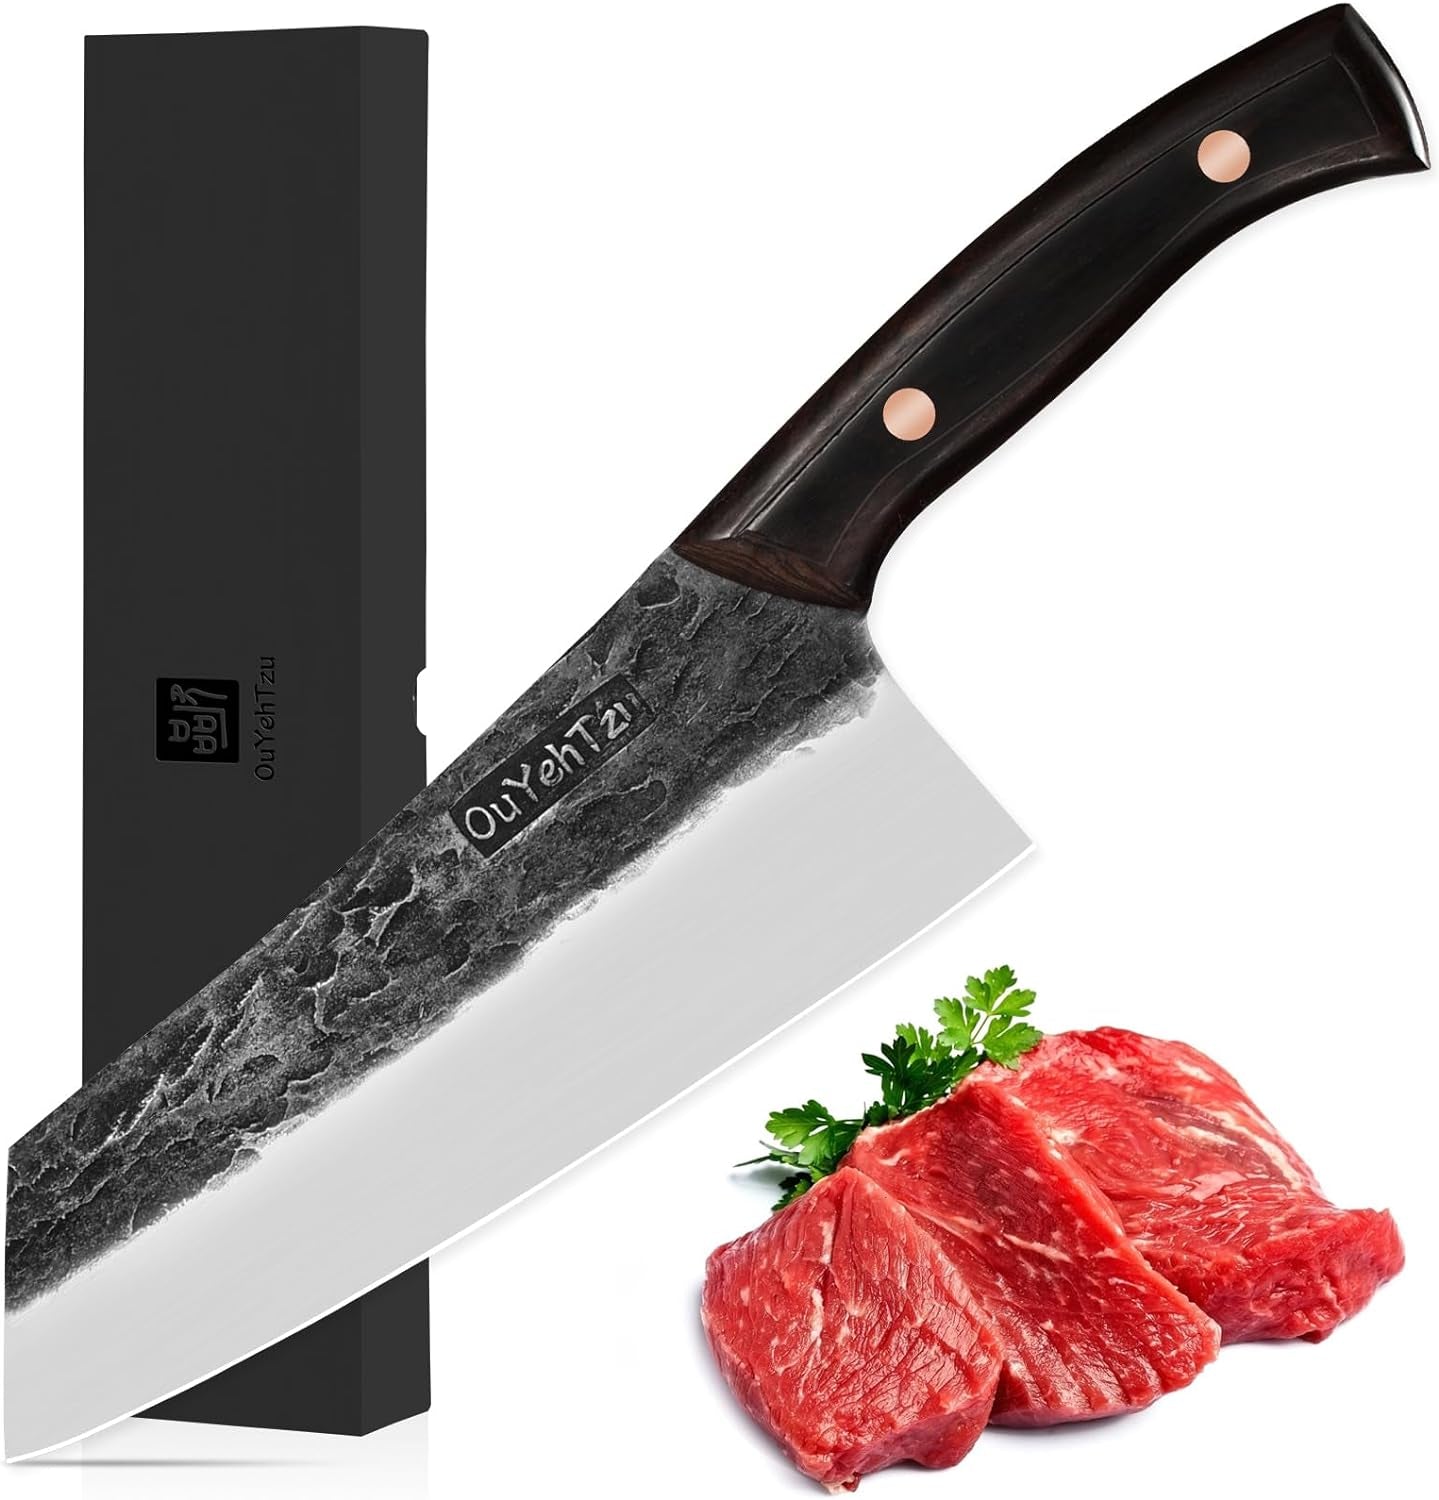 KD Forged Kiritsuke Kitchen Kitchen Knife Cleaver with Gift Box